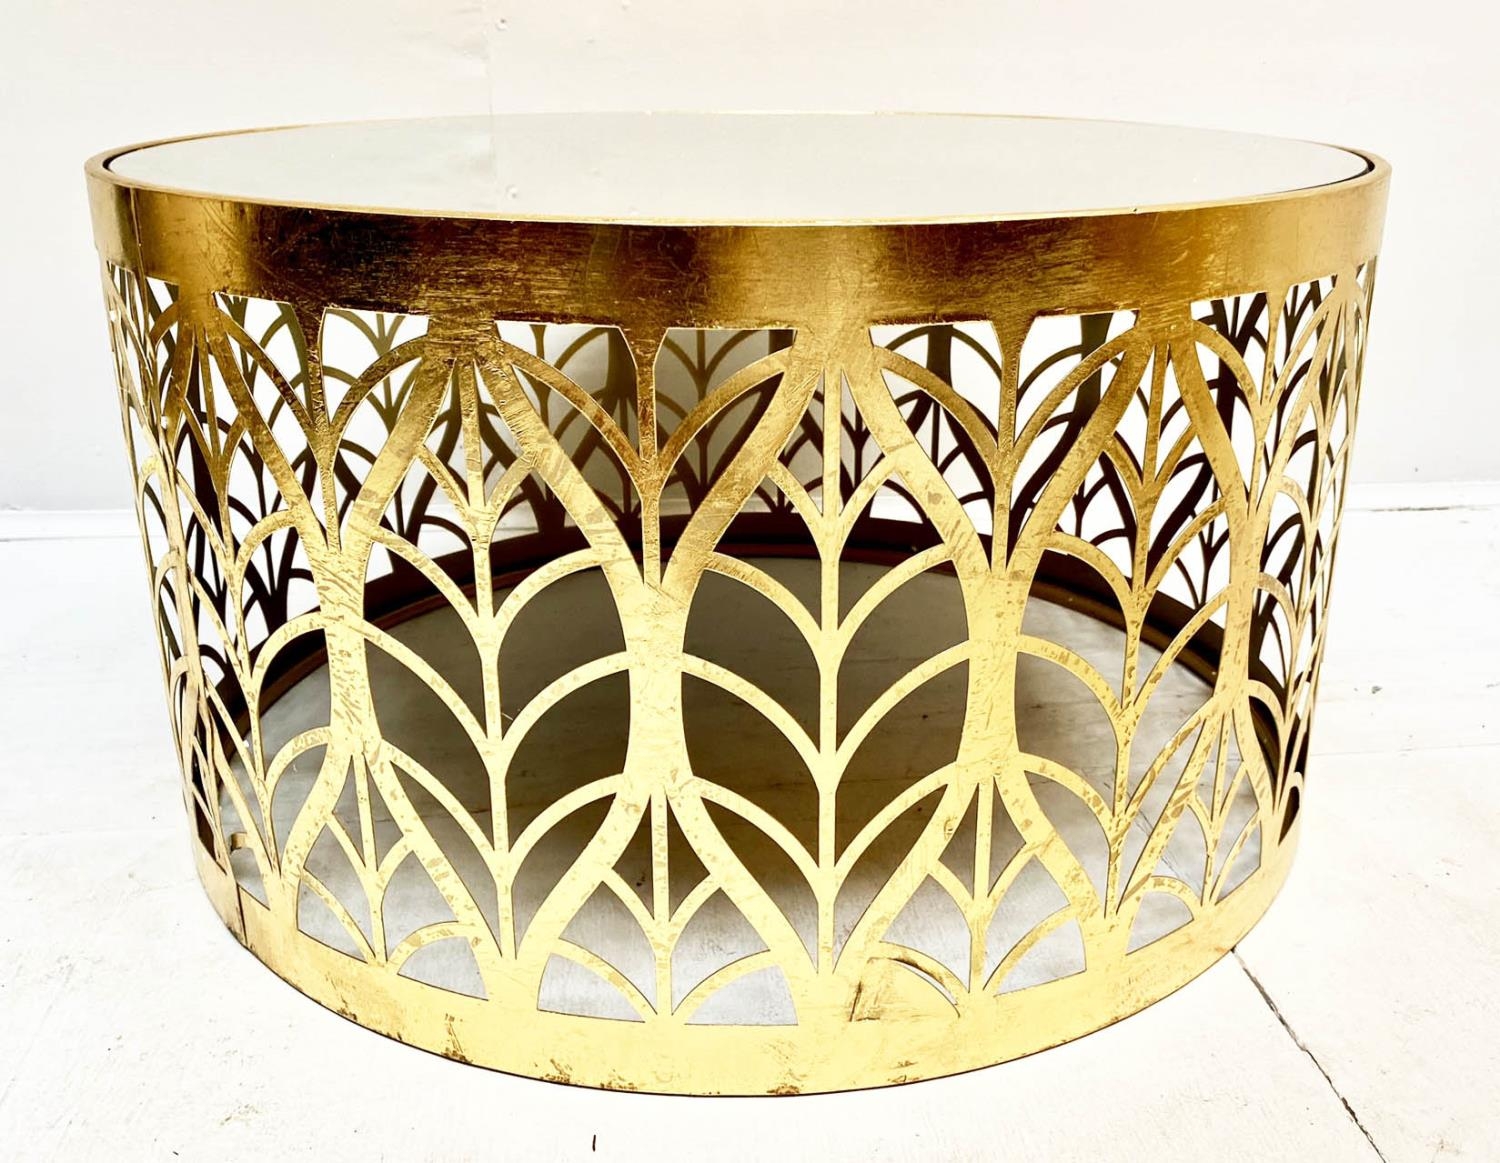 LOW TABLE, 40cm H x 74cm diam., 1970s Italian style, gilt metal, mirrored glass top, leaf pierced - Image 2 of 3